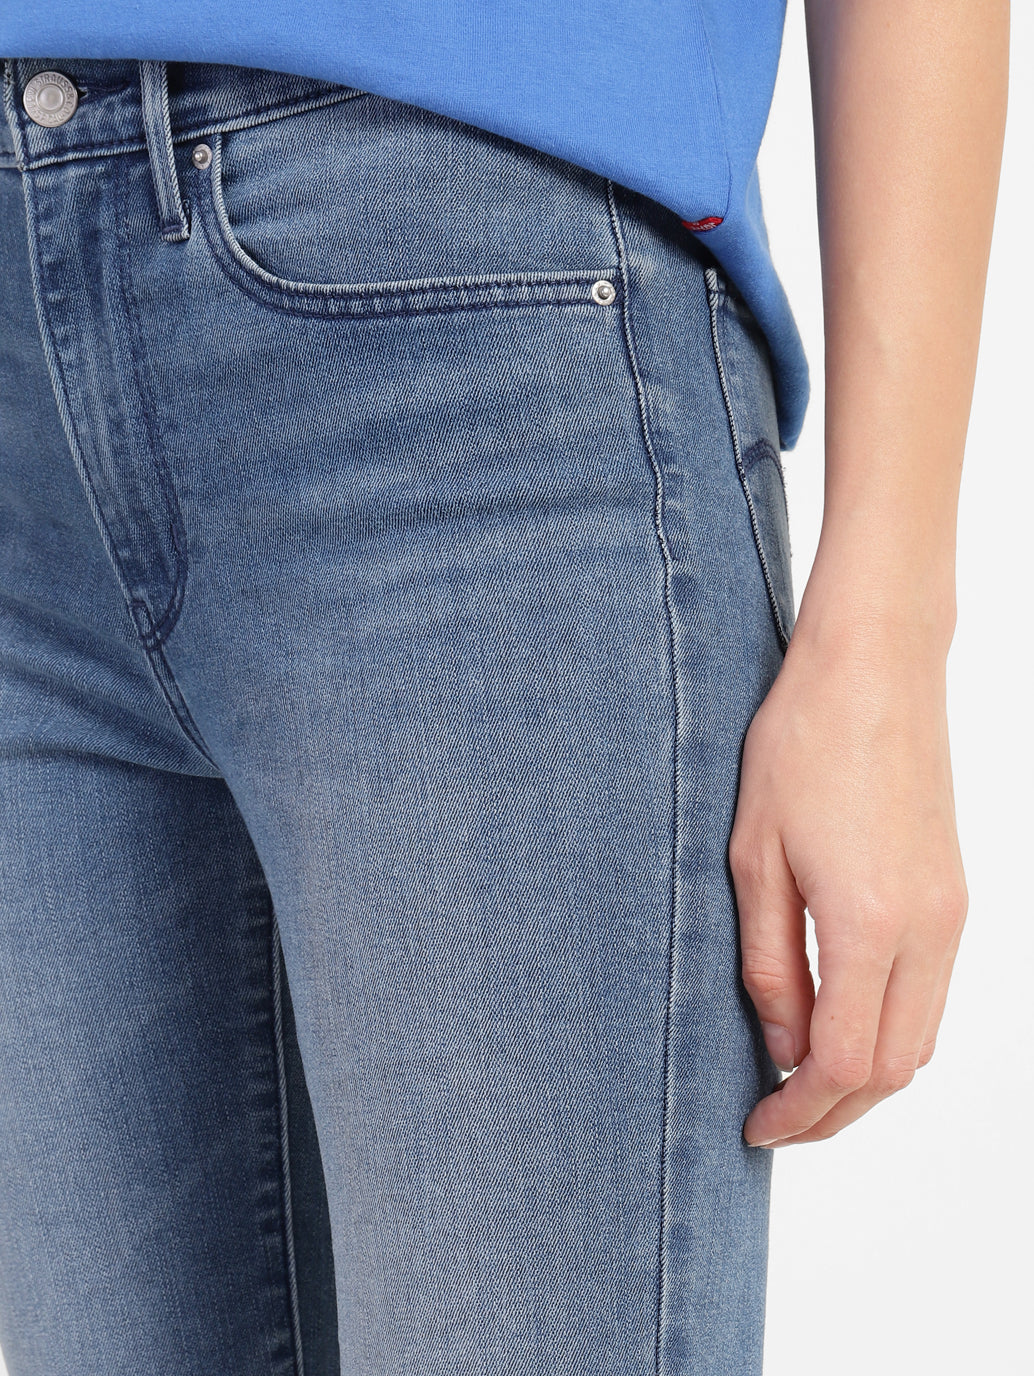 Bottom Jeans - Buy Bottom Jeans Online Starting at Just ₹178